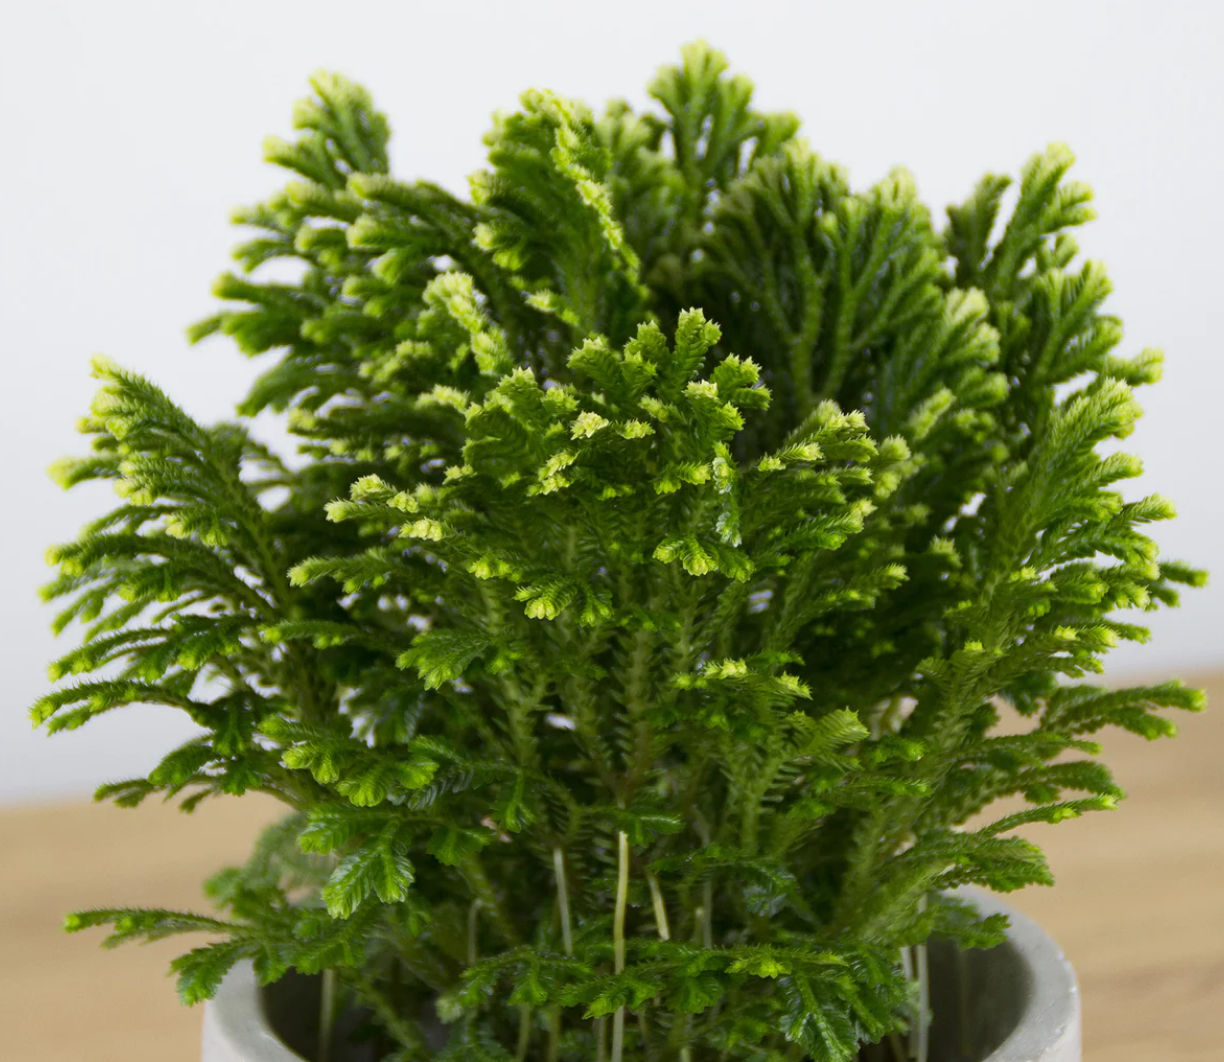 Selaginella martensii jori, Compact Spike moss, terrarium plant, stunning Selaginella that grows upright